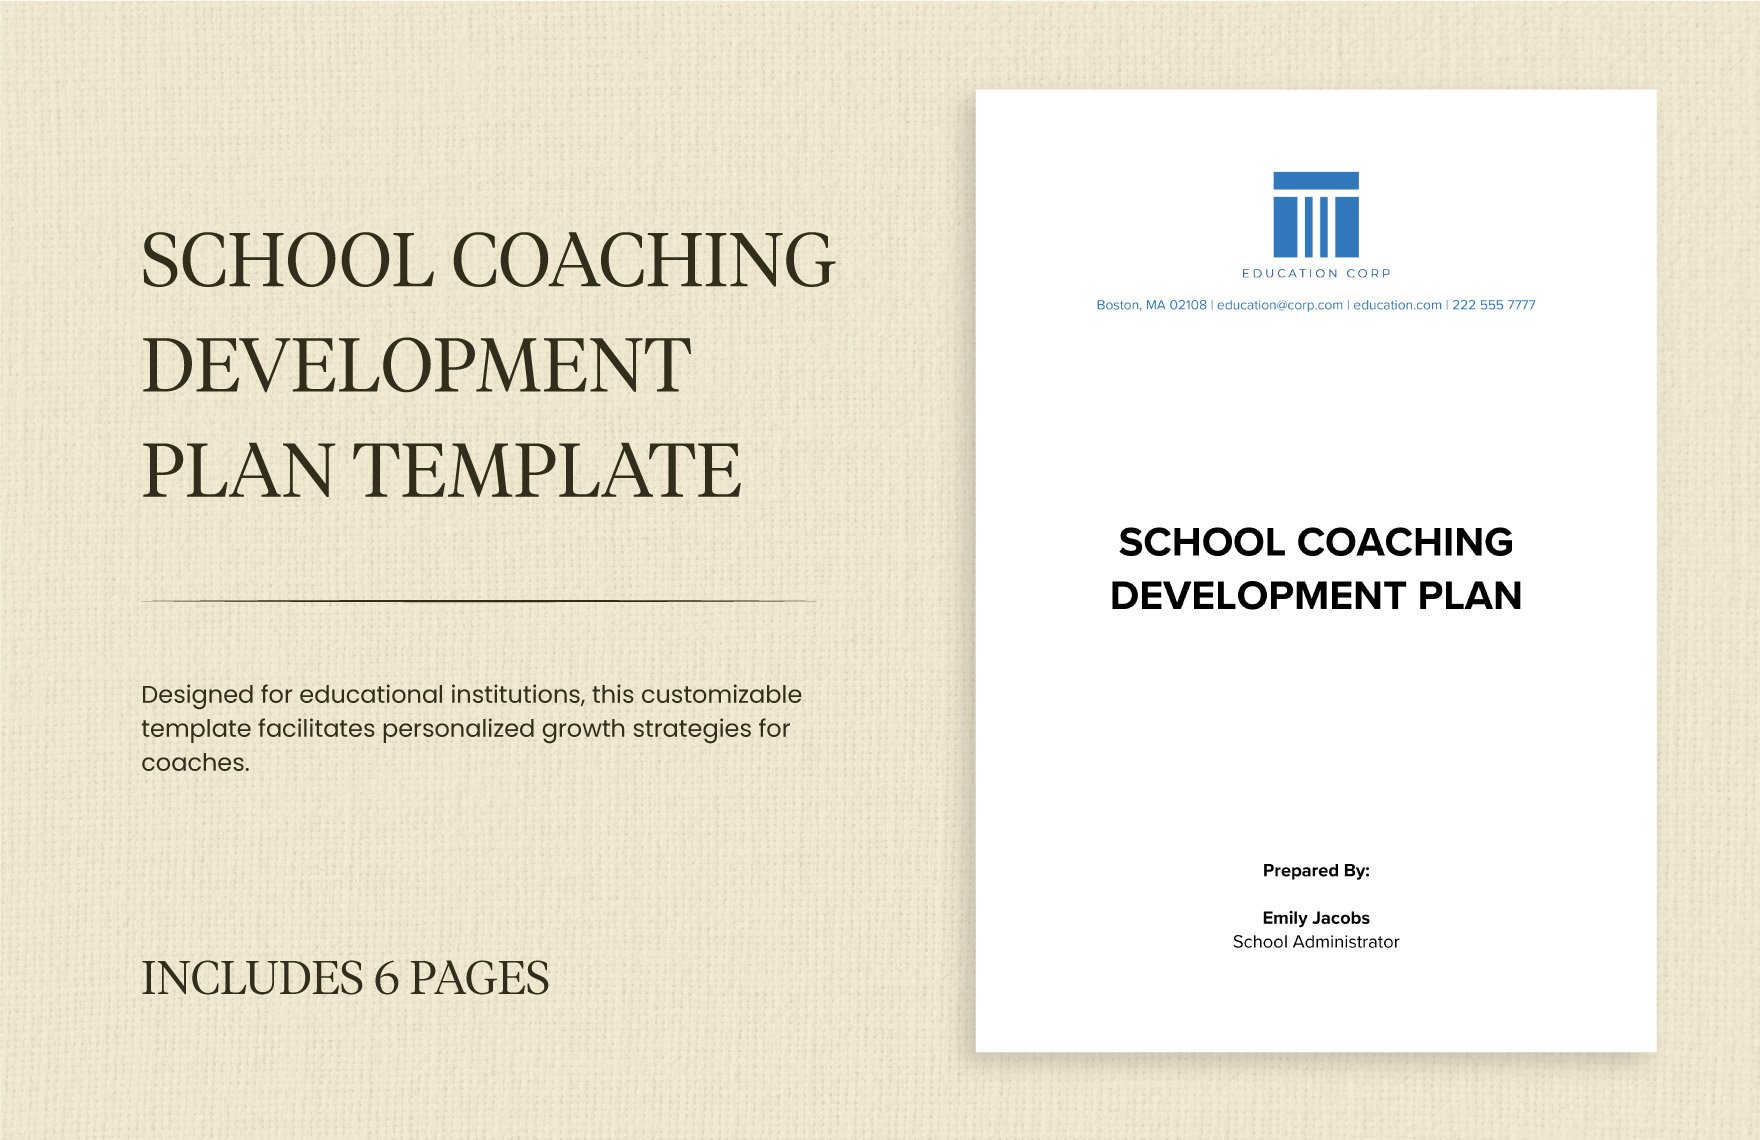 School Coaching Development Plan Template